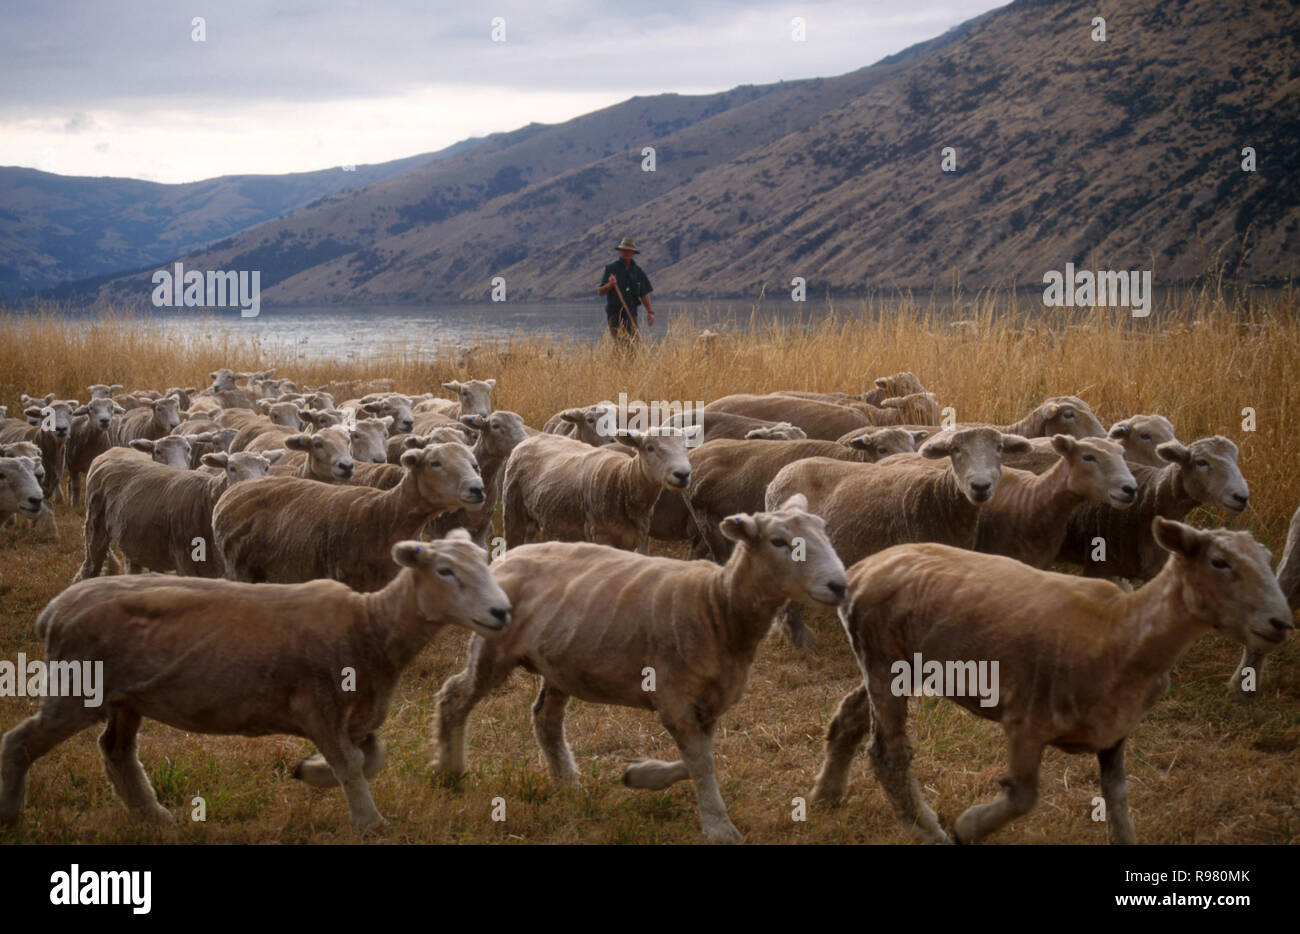 A FARMER MOVES A HERD OF FRESHLY SHORN SHEEP, RURAL NEW ZEALAND. Stock Photo